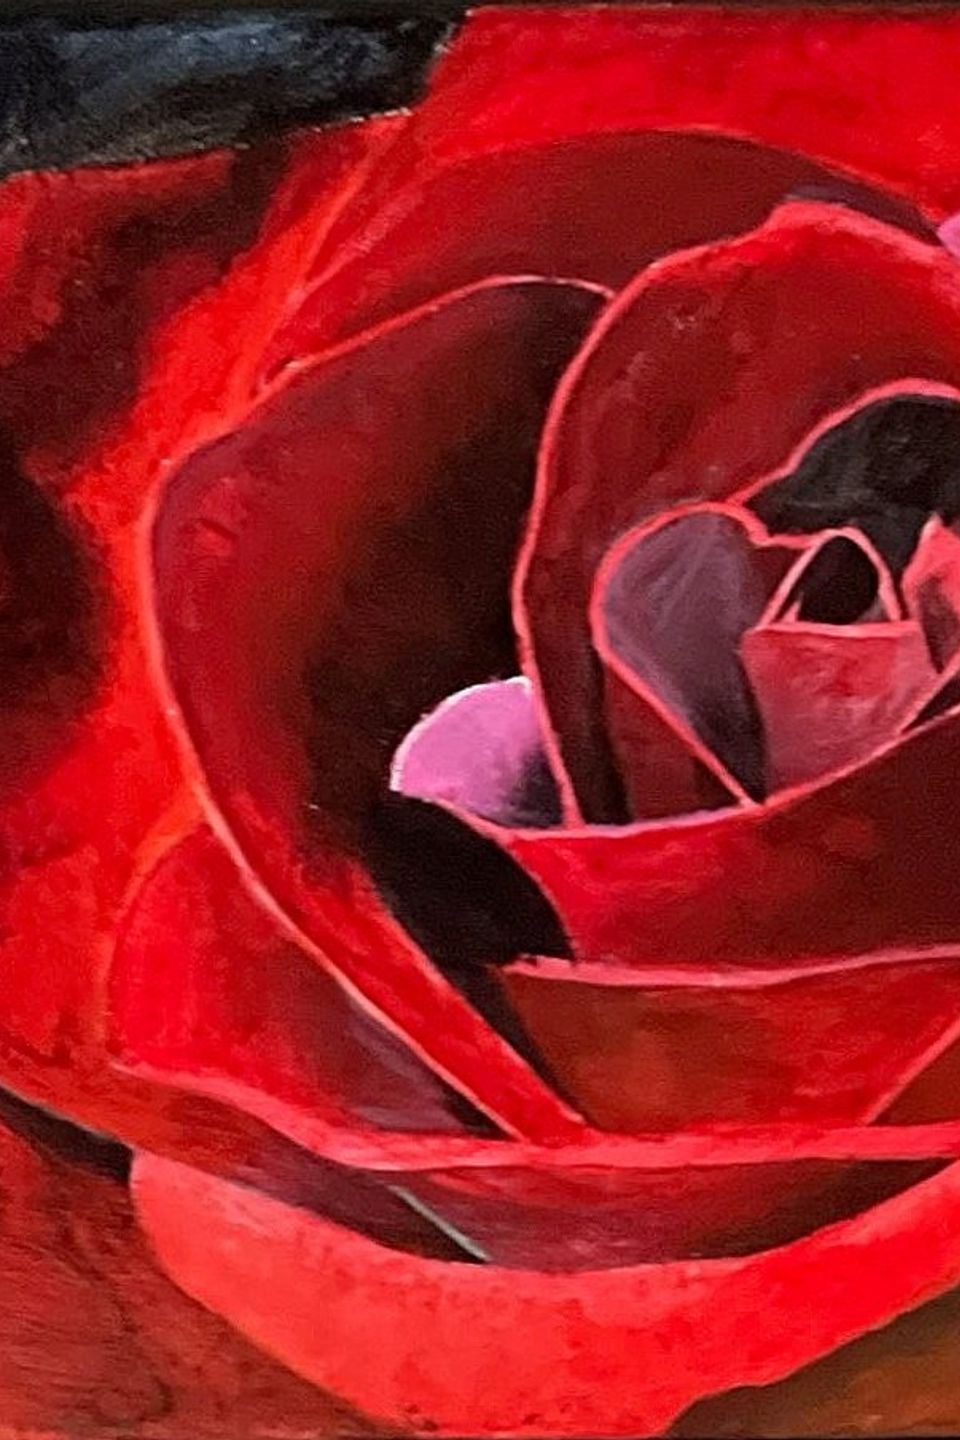 Josh color rose painting